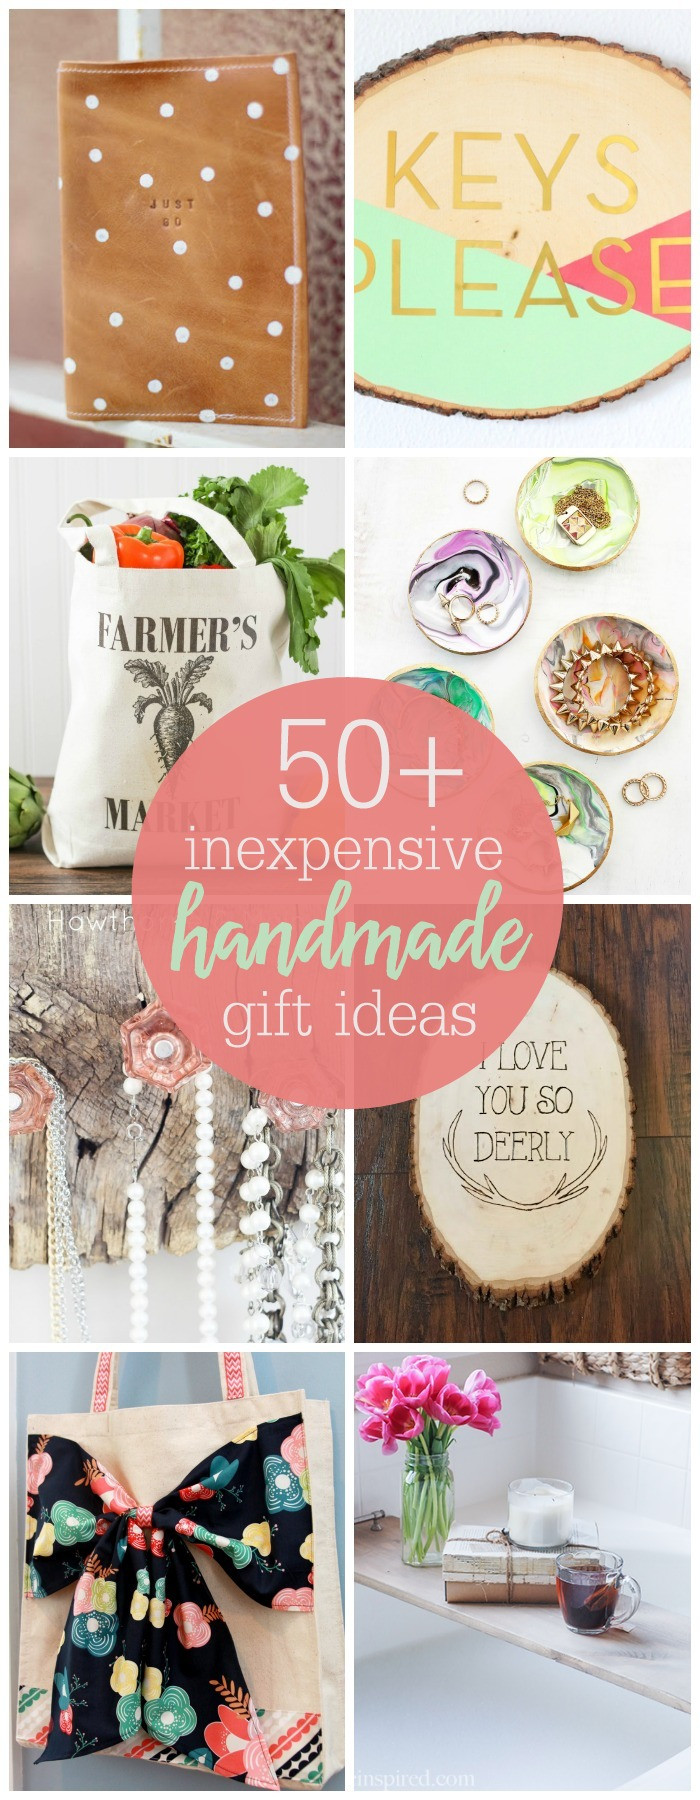 Cheap Homemade Christmas Gift Ideas
 Inexpensive Handmade Gift Ideas